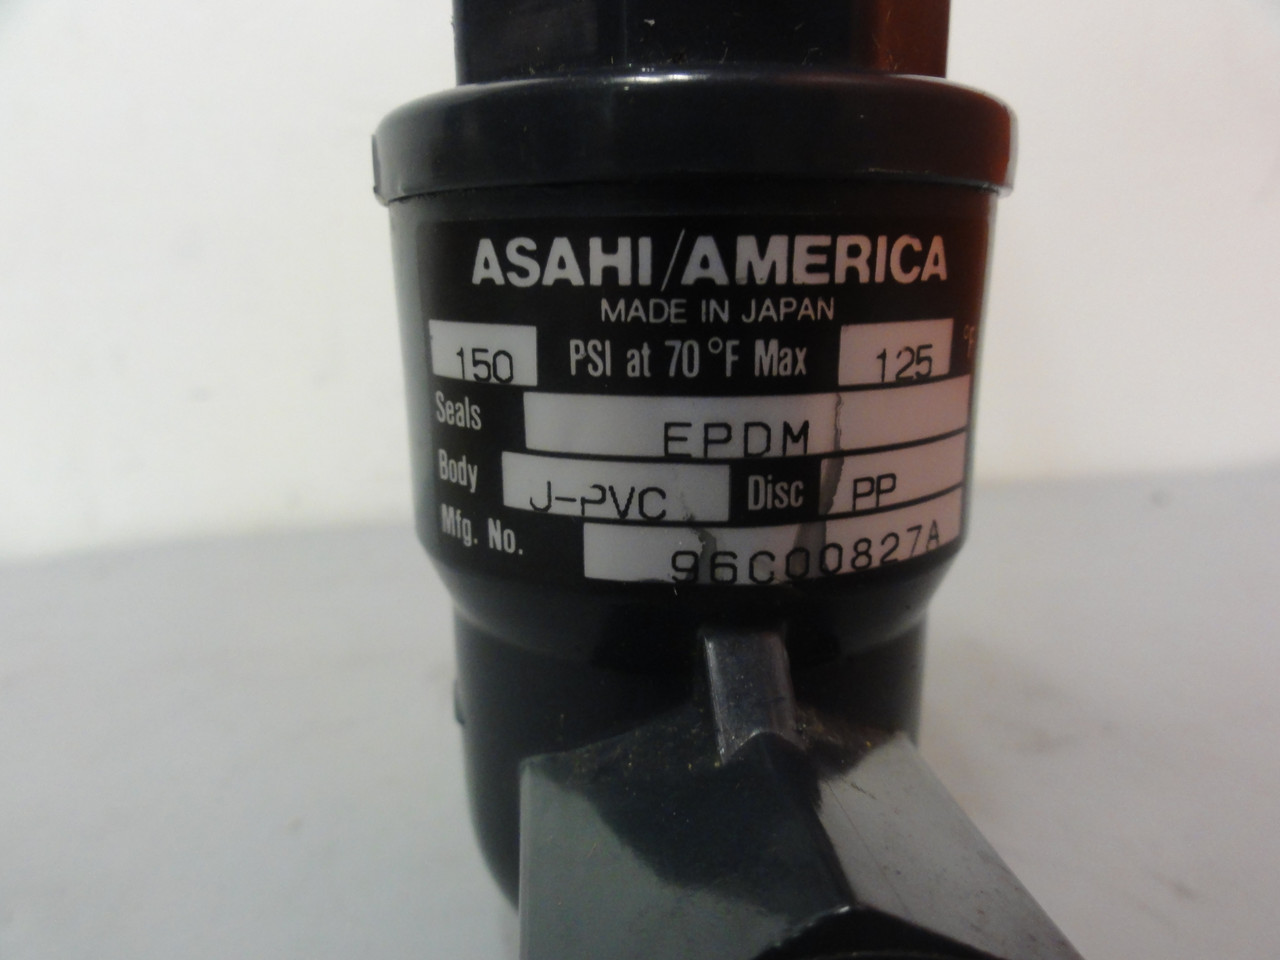 Asahi/America EPDM Valve PVC 96C00827A